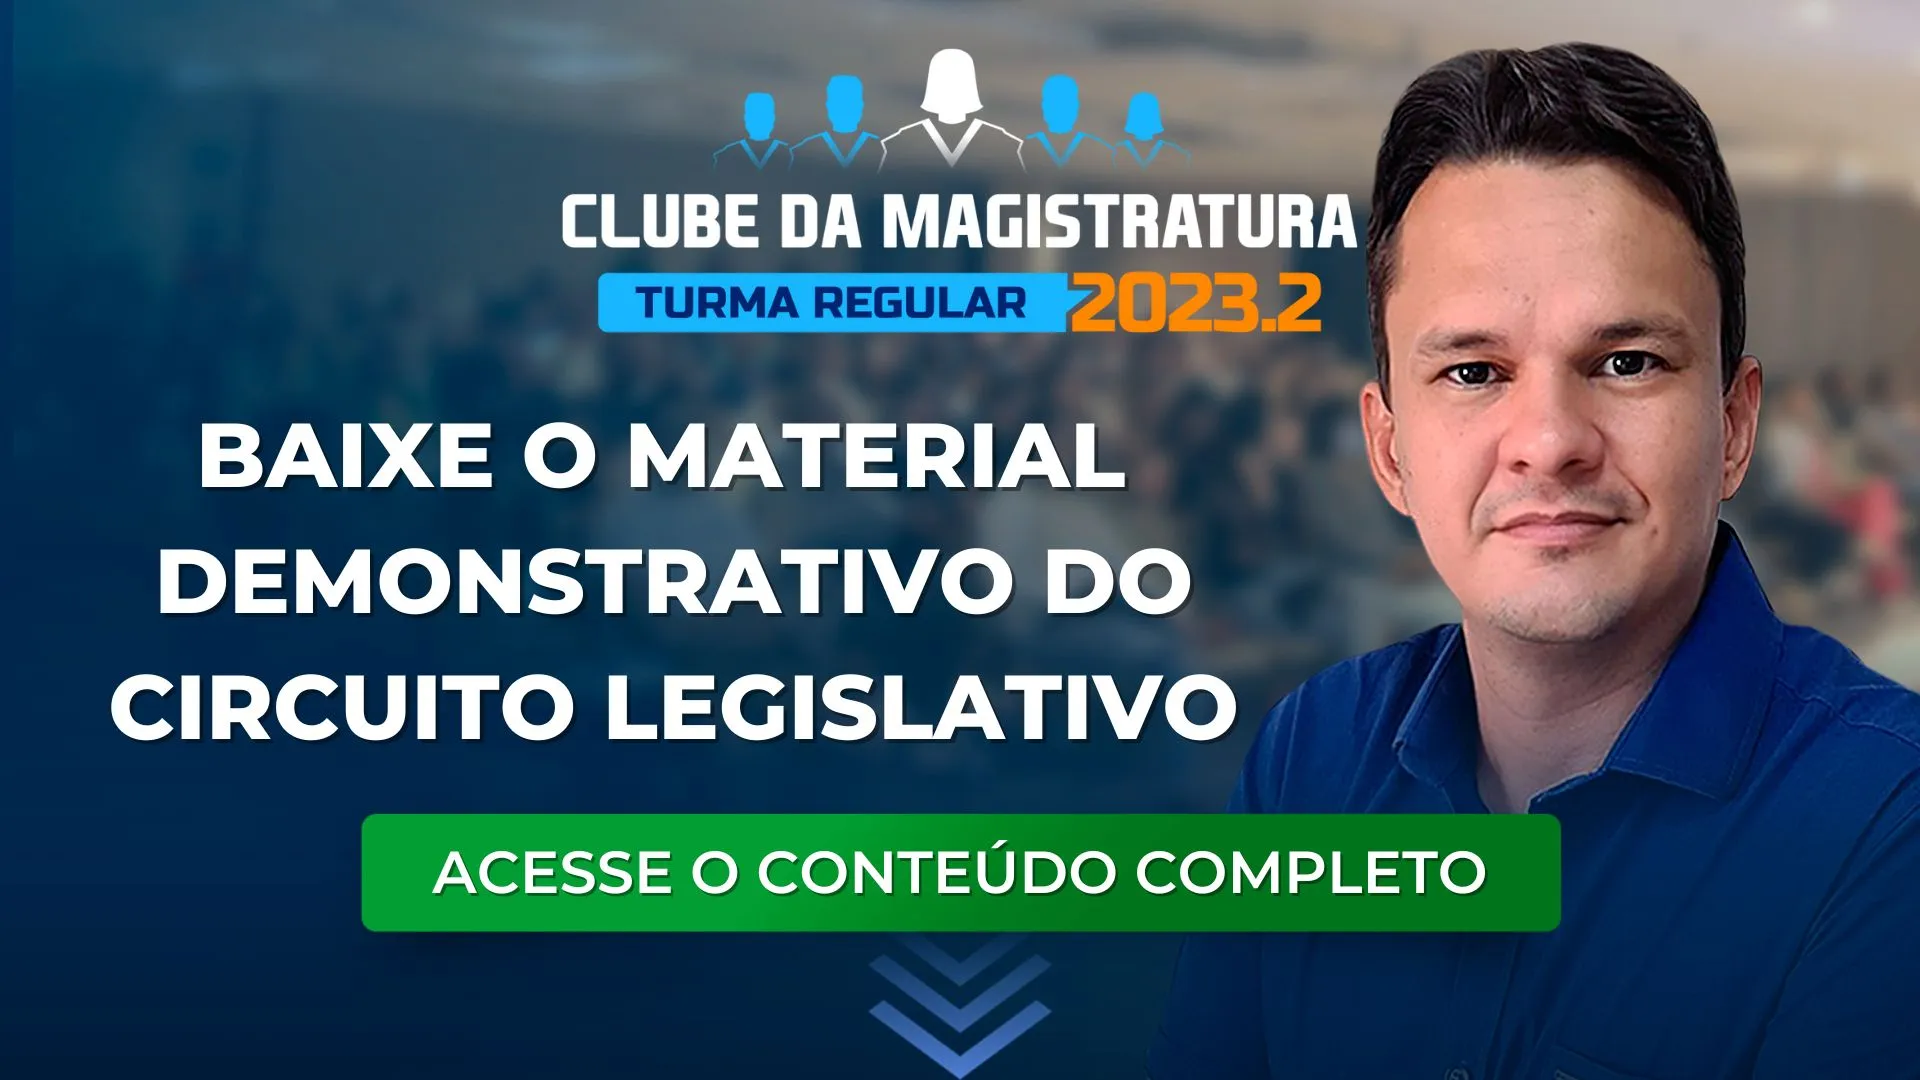 Clube da Magistratura 2023.2: baixe o material demonstrativo do circuito legislativo